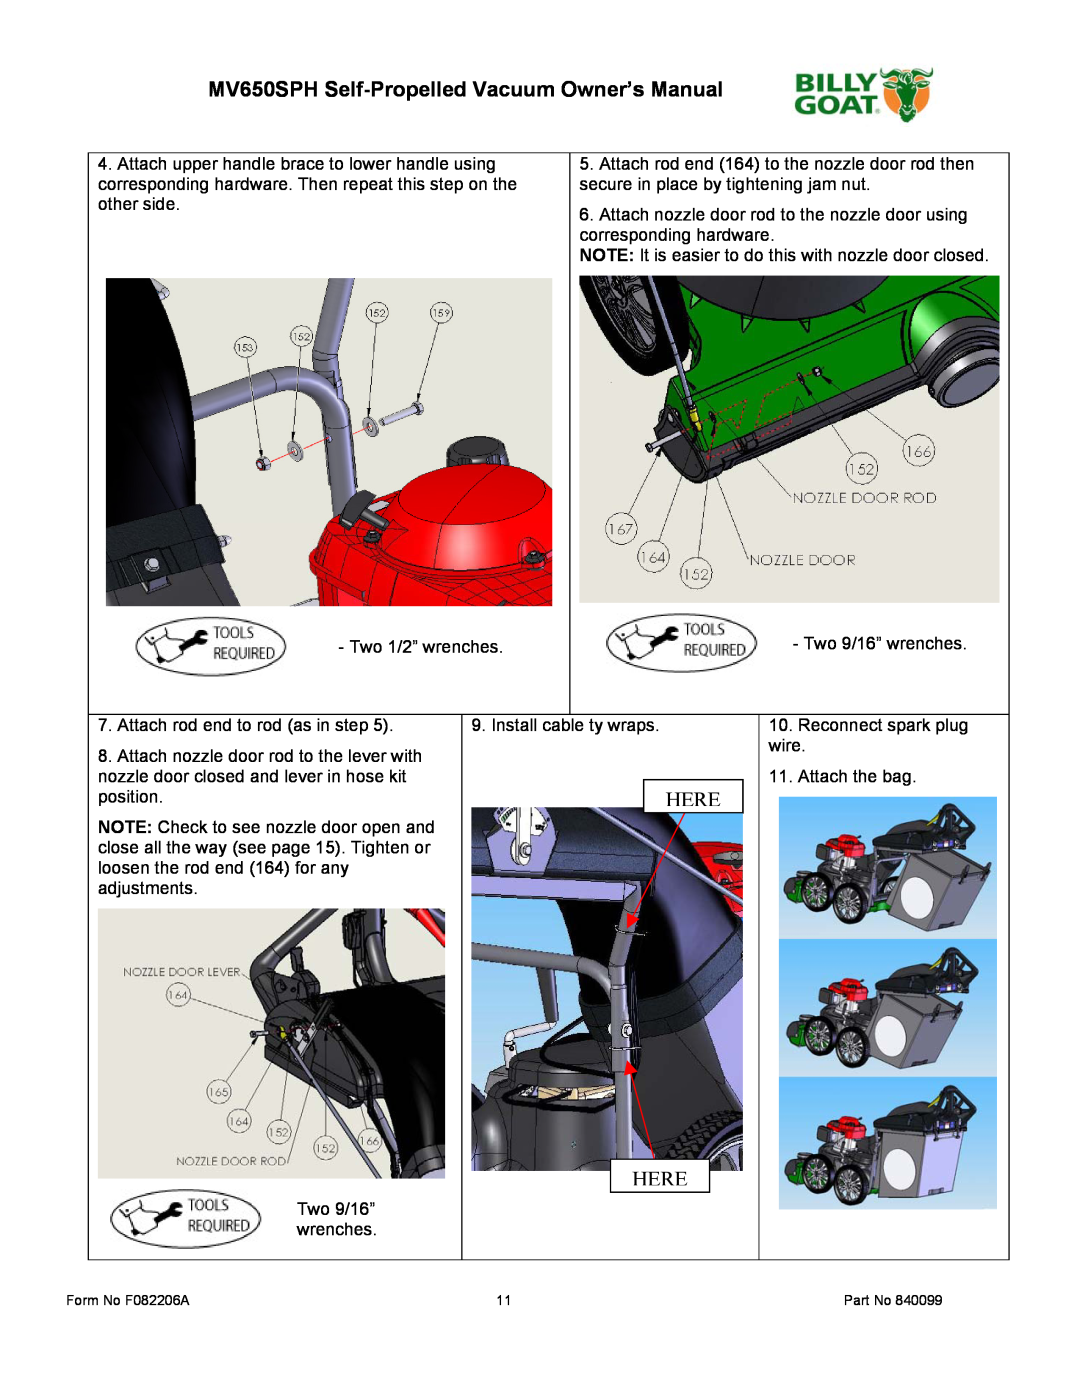 Billy Goat owner manual Here, MV650SPH Self-Propelled Vacuum Owner’s Manual 